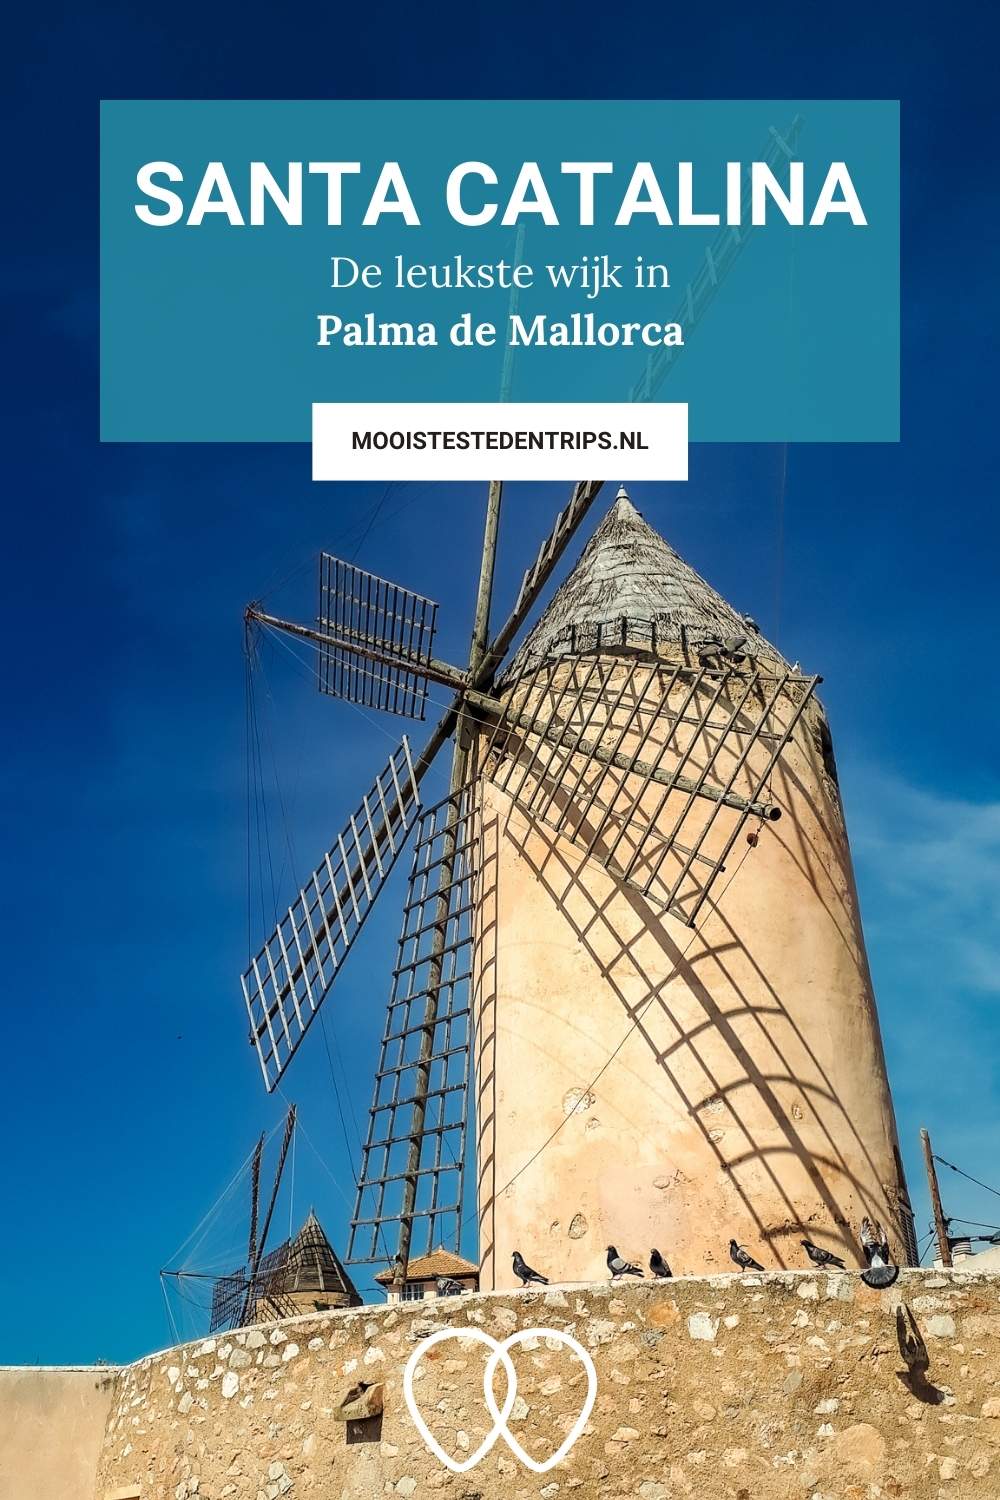 Santa Catalina, Palma de Mallorca: leuke adresjes in Santa Catalina in Palma de Mallorca | Mooistestedentrips.nl